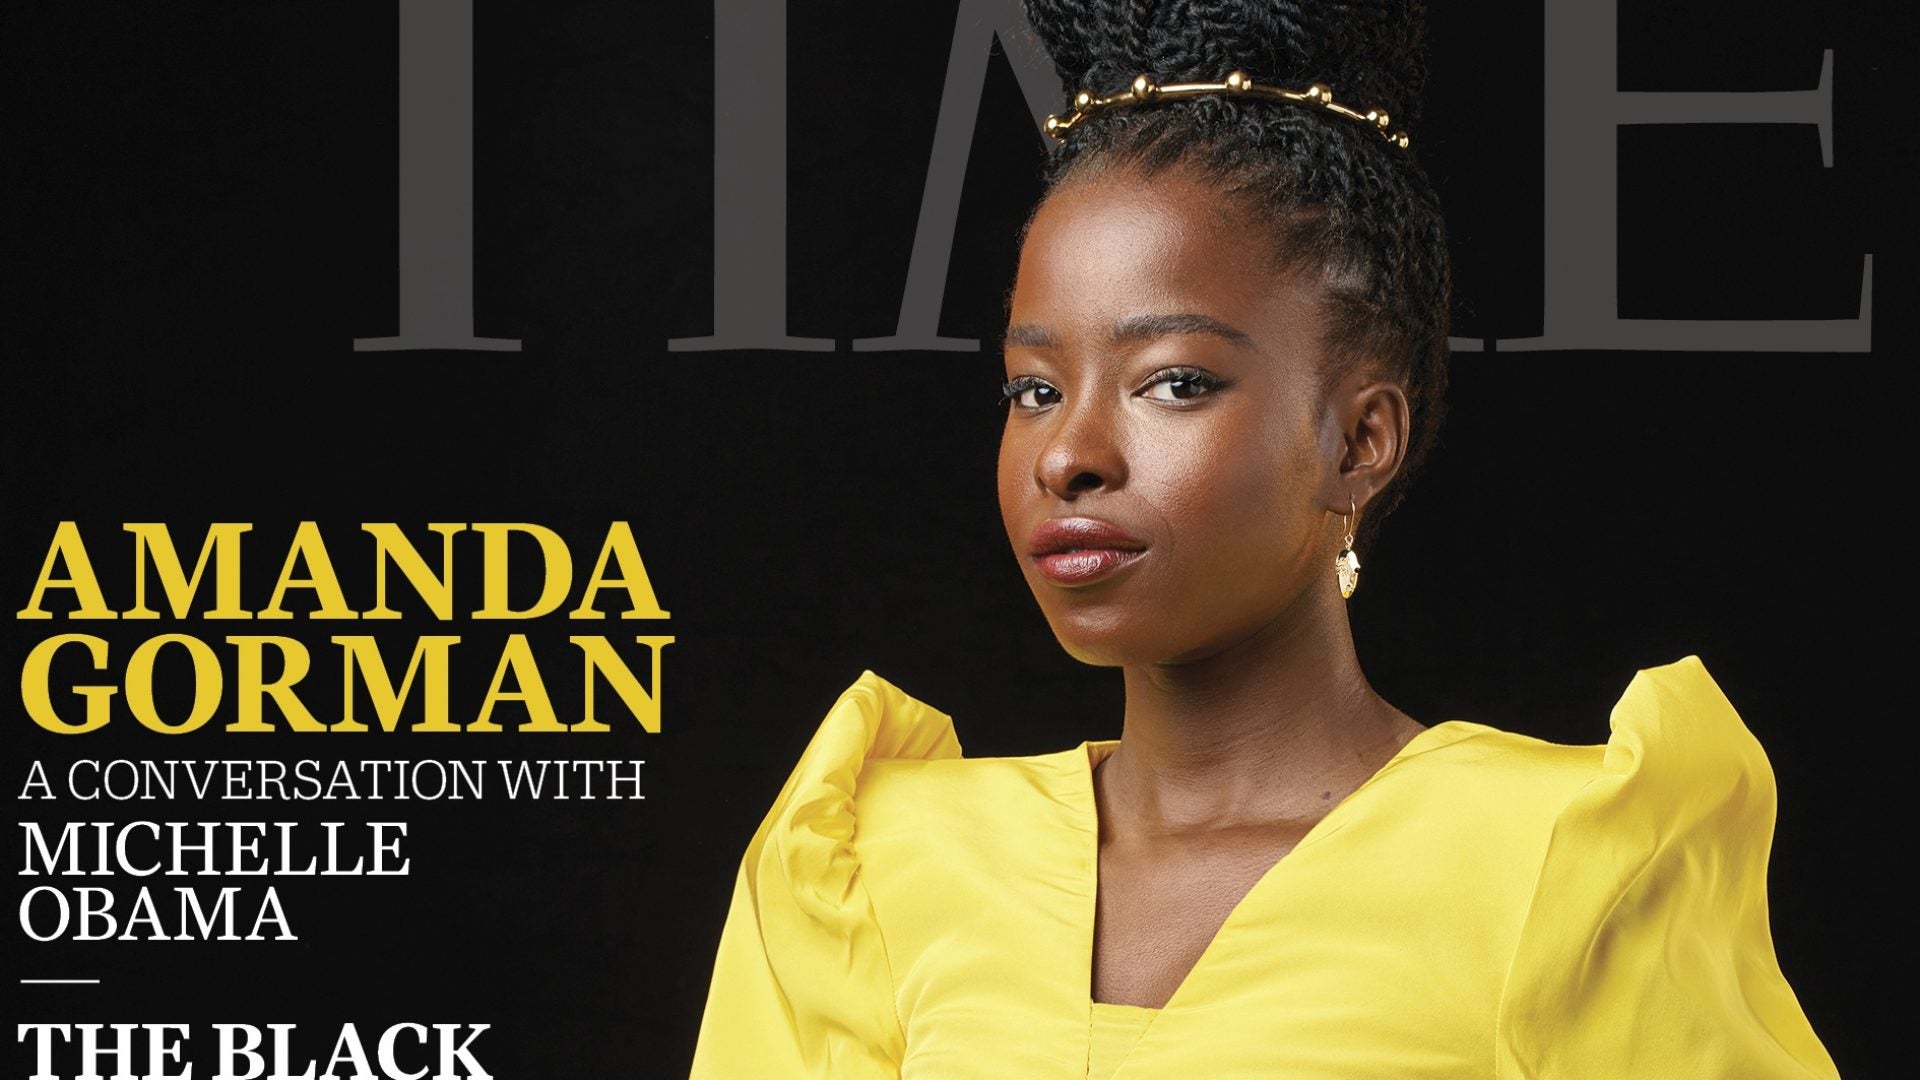 Amanda Gorman Covers TIME Black Renaissance Issue